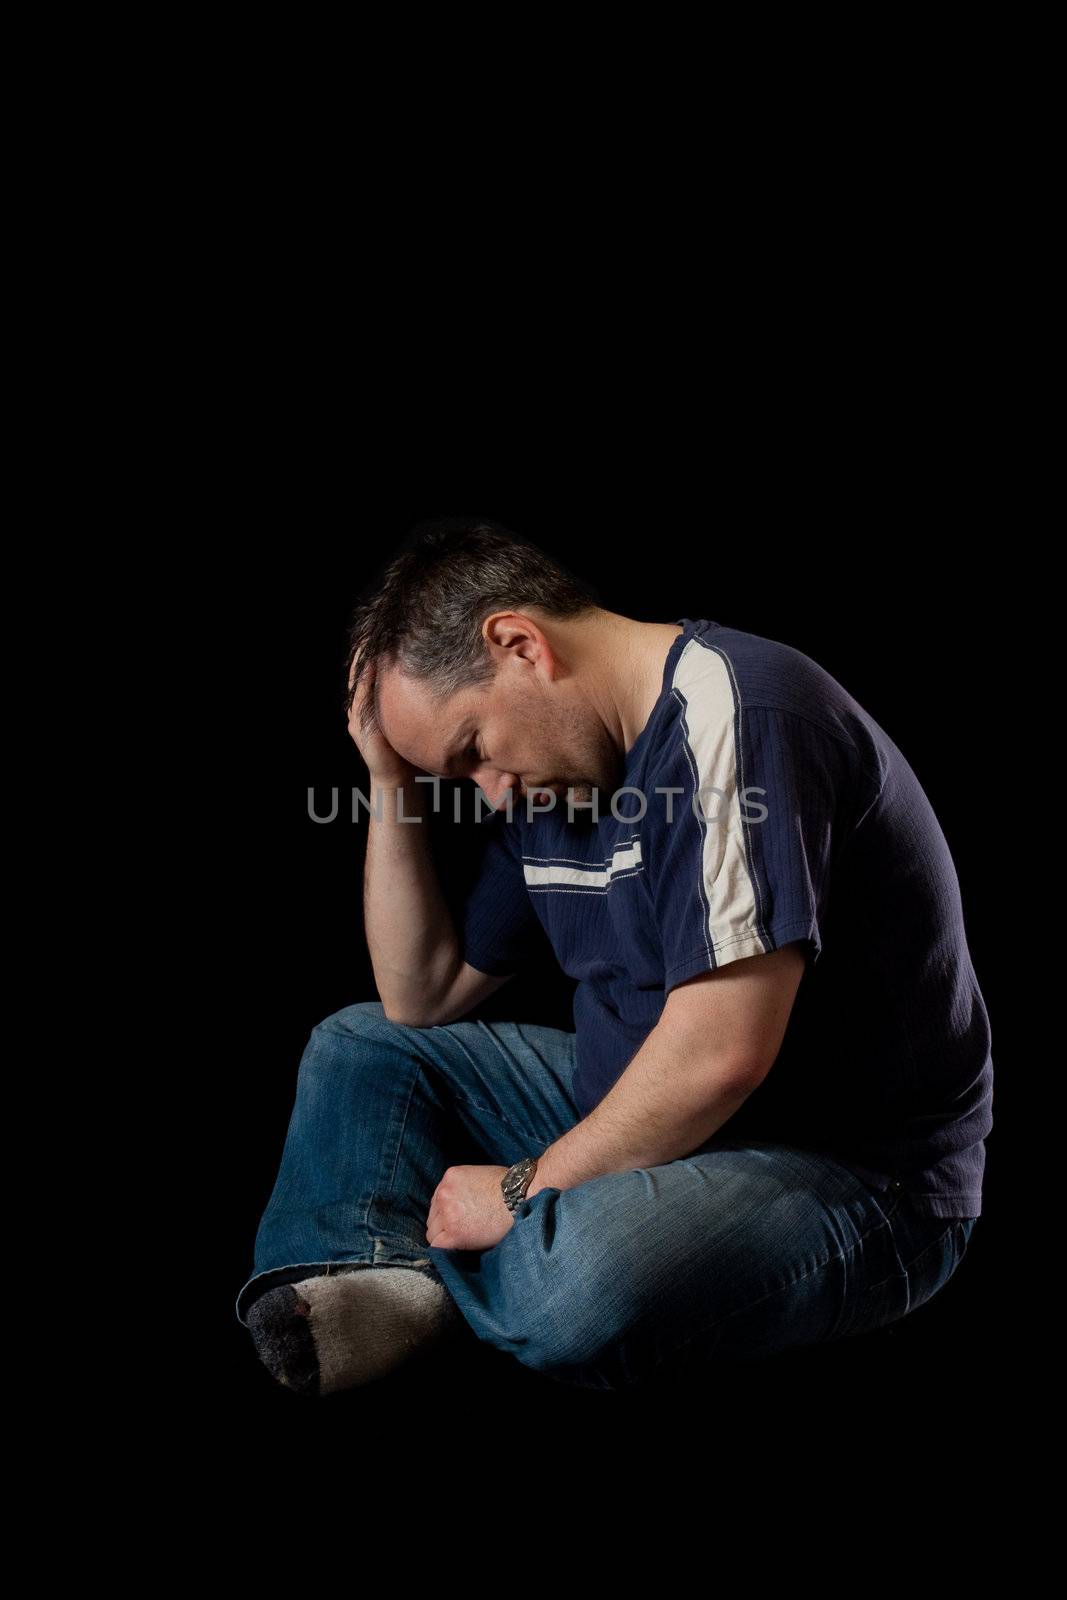 Depressed man on black background